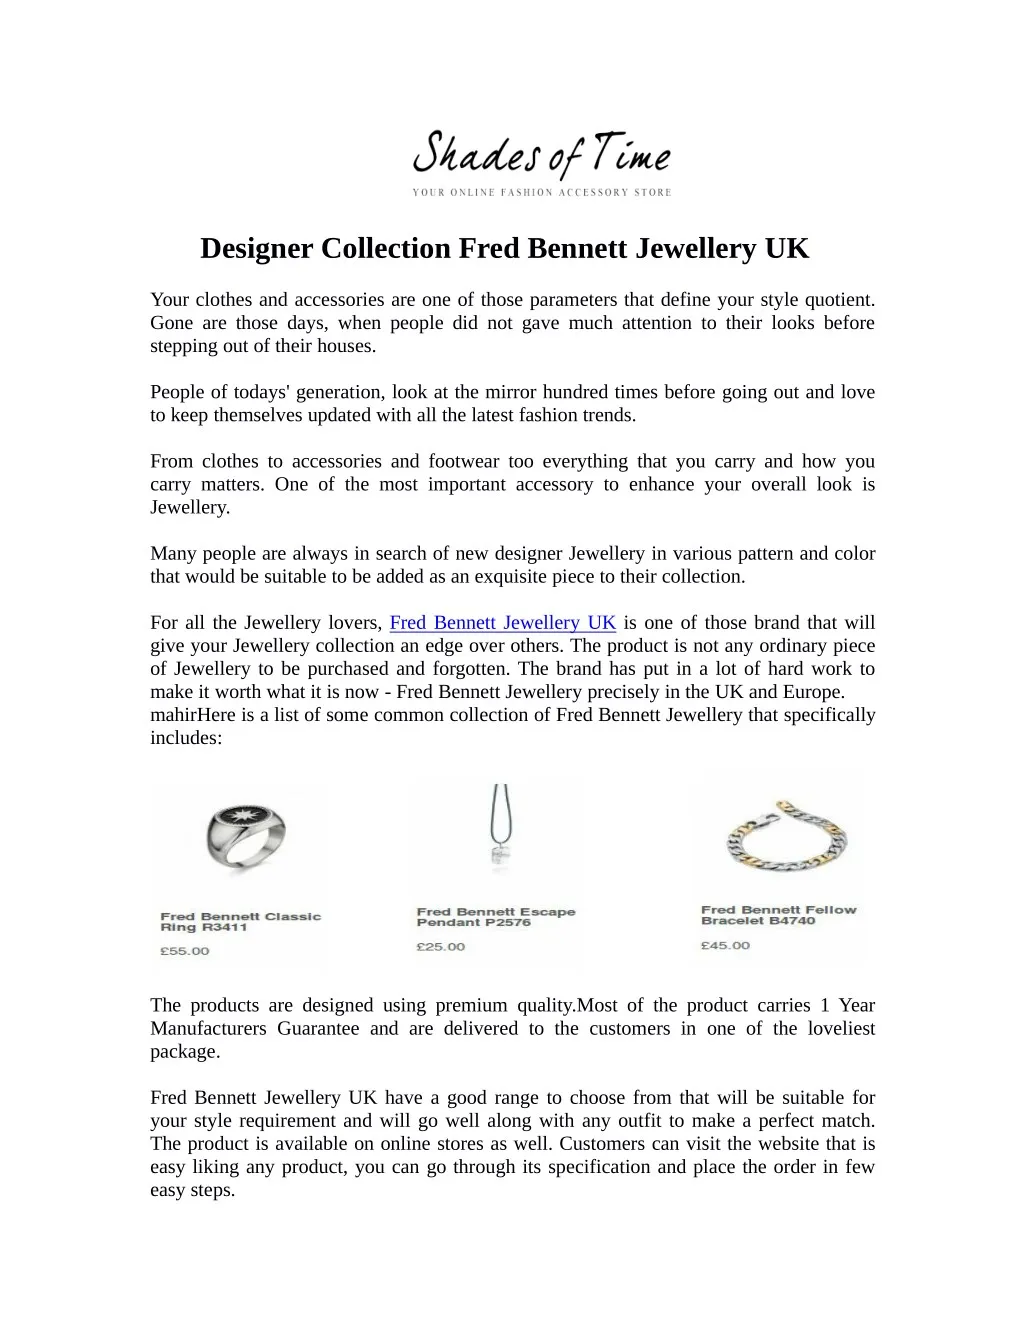 designer collection fred bennett jewellery uk